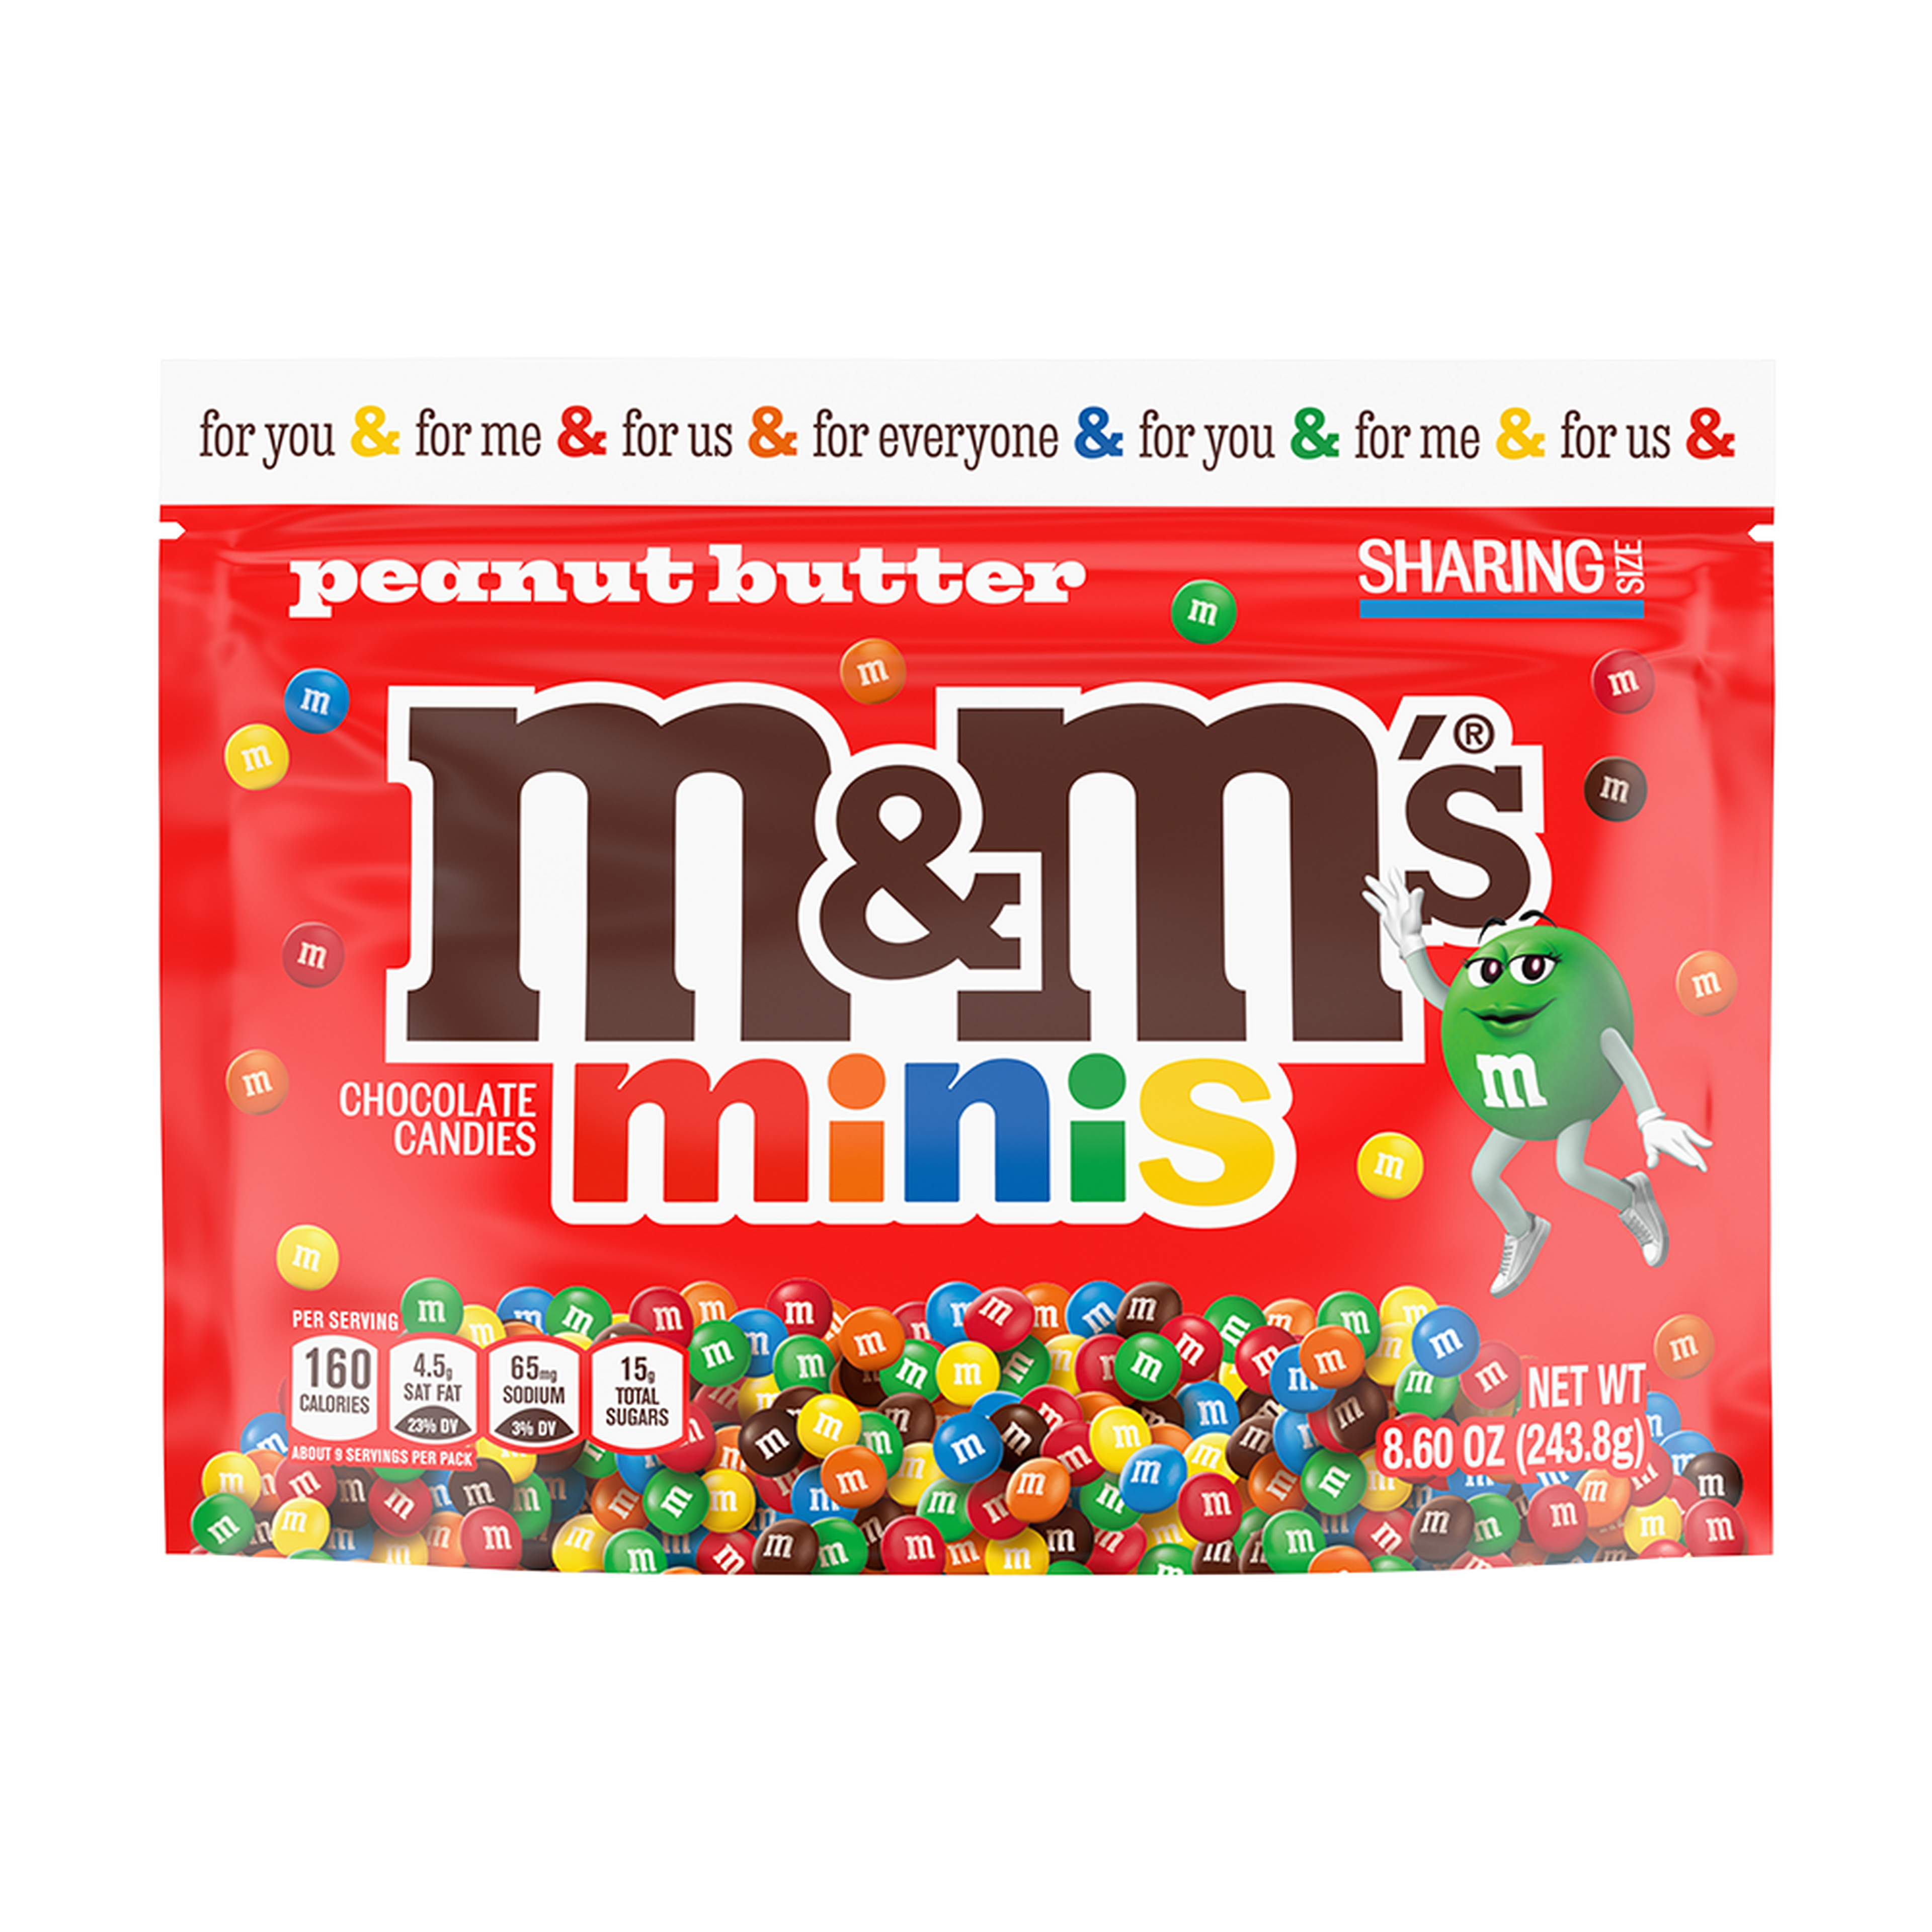 M&M's Chocolate Candies, Mad Scientist Mix - 8.0 oz